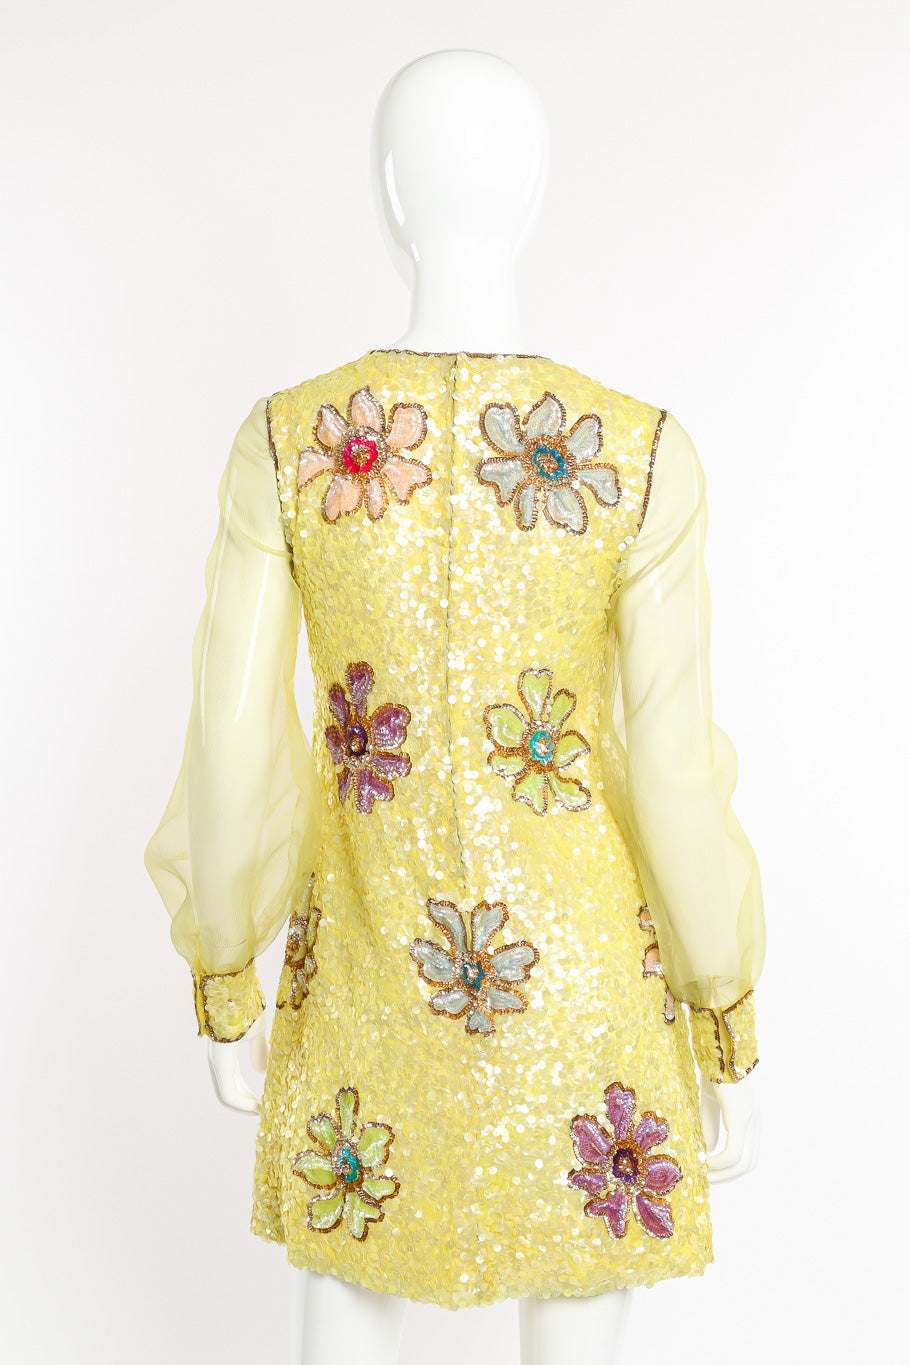 Vintage Courlande Silk Organza Flower Sequin Dress back view on mannequin @Recessla